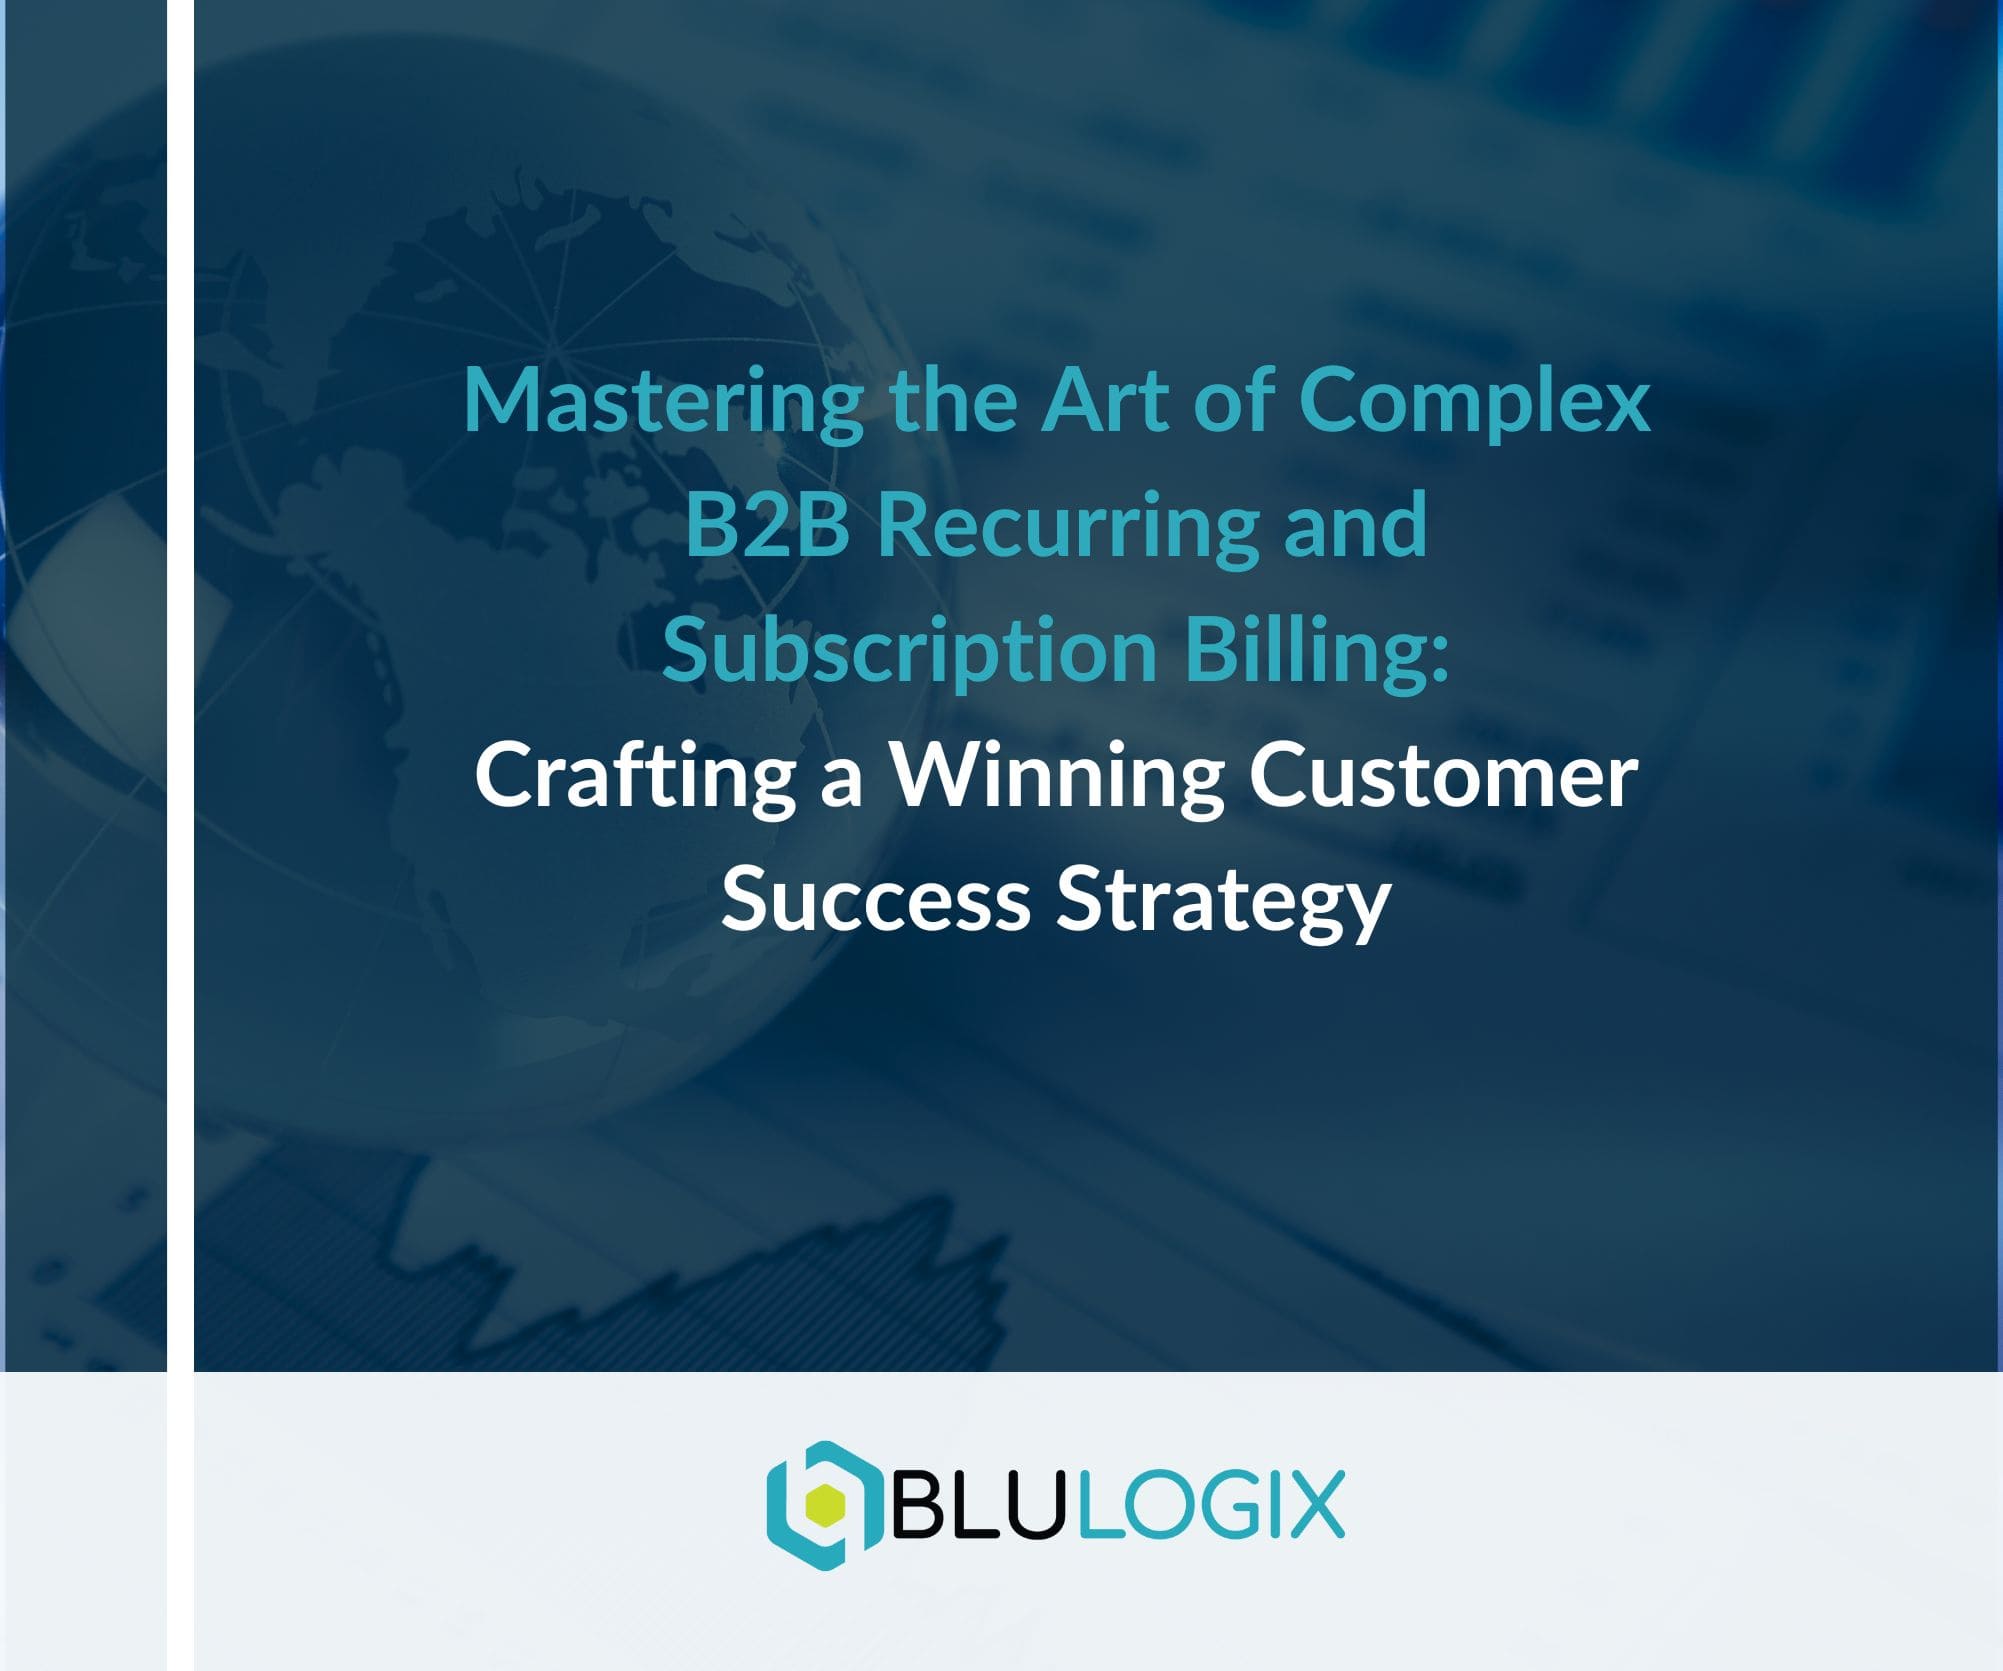 Crafting a Winning Customer Success Strategy